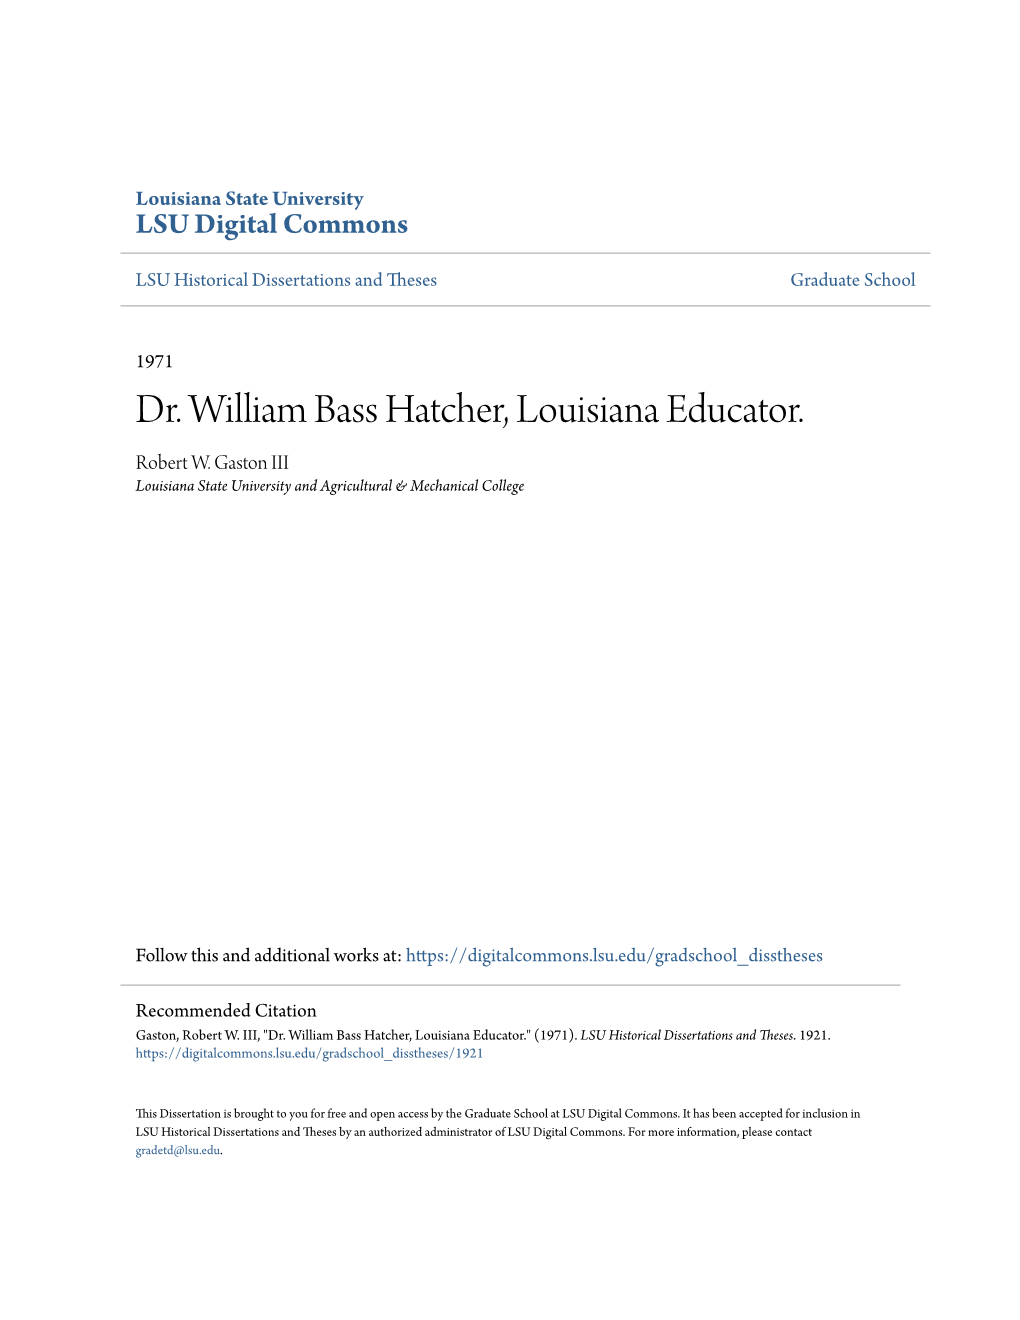 Dr. William Bass Hatcher, Louisiana Educator. Robert W